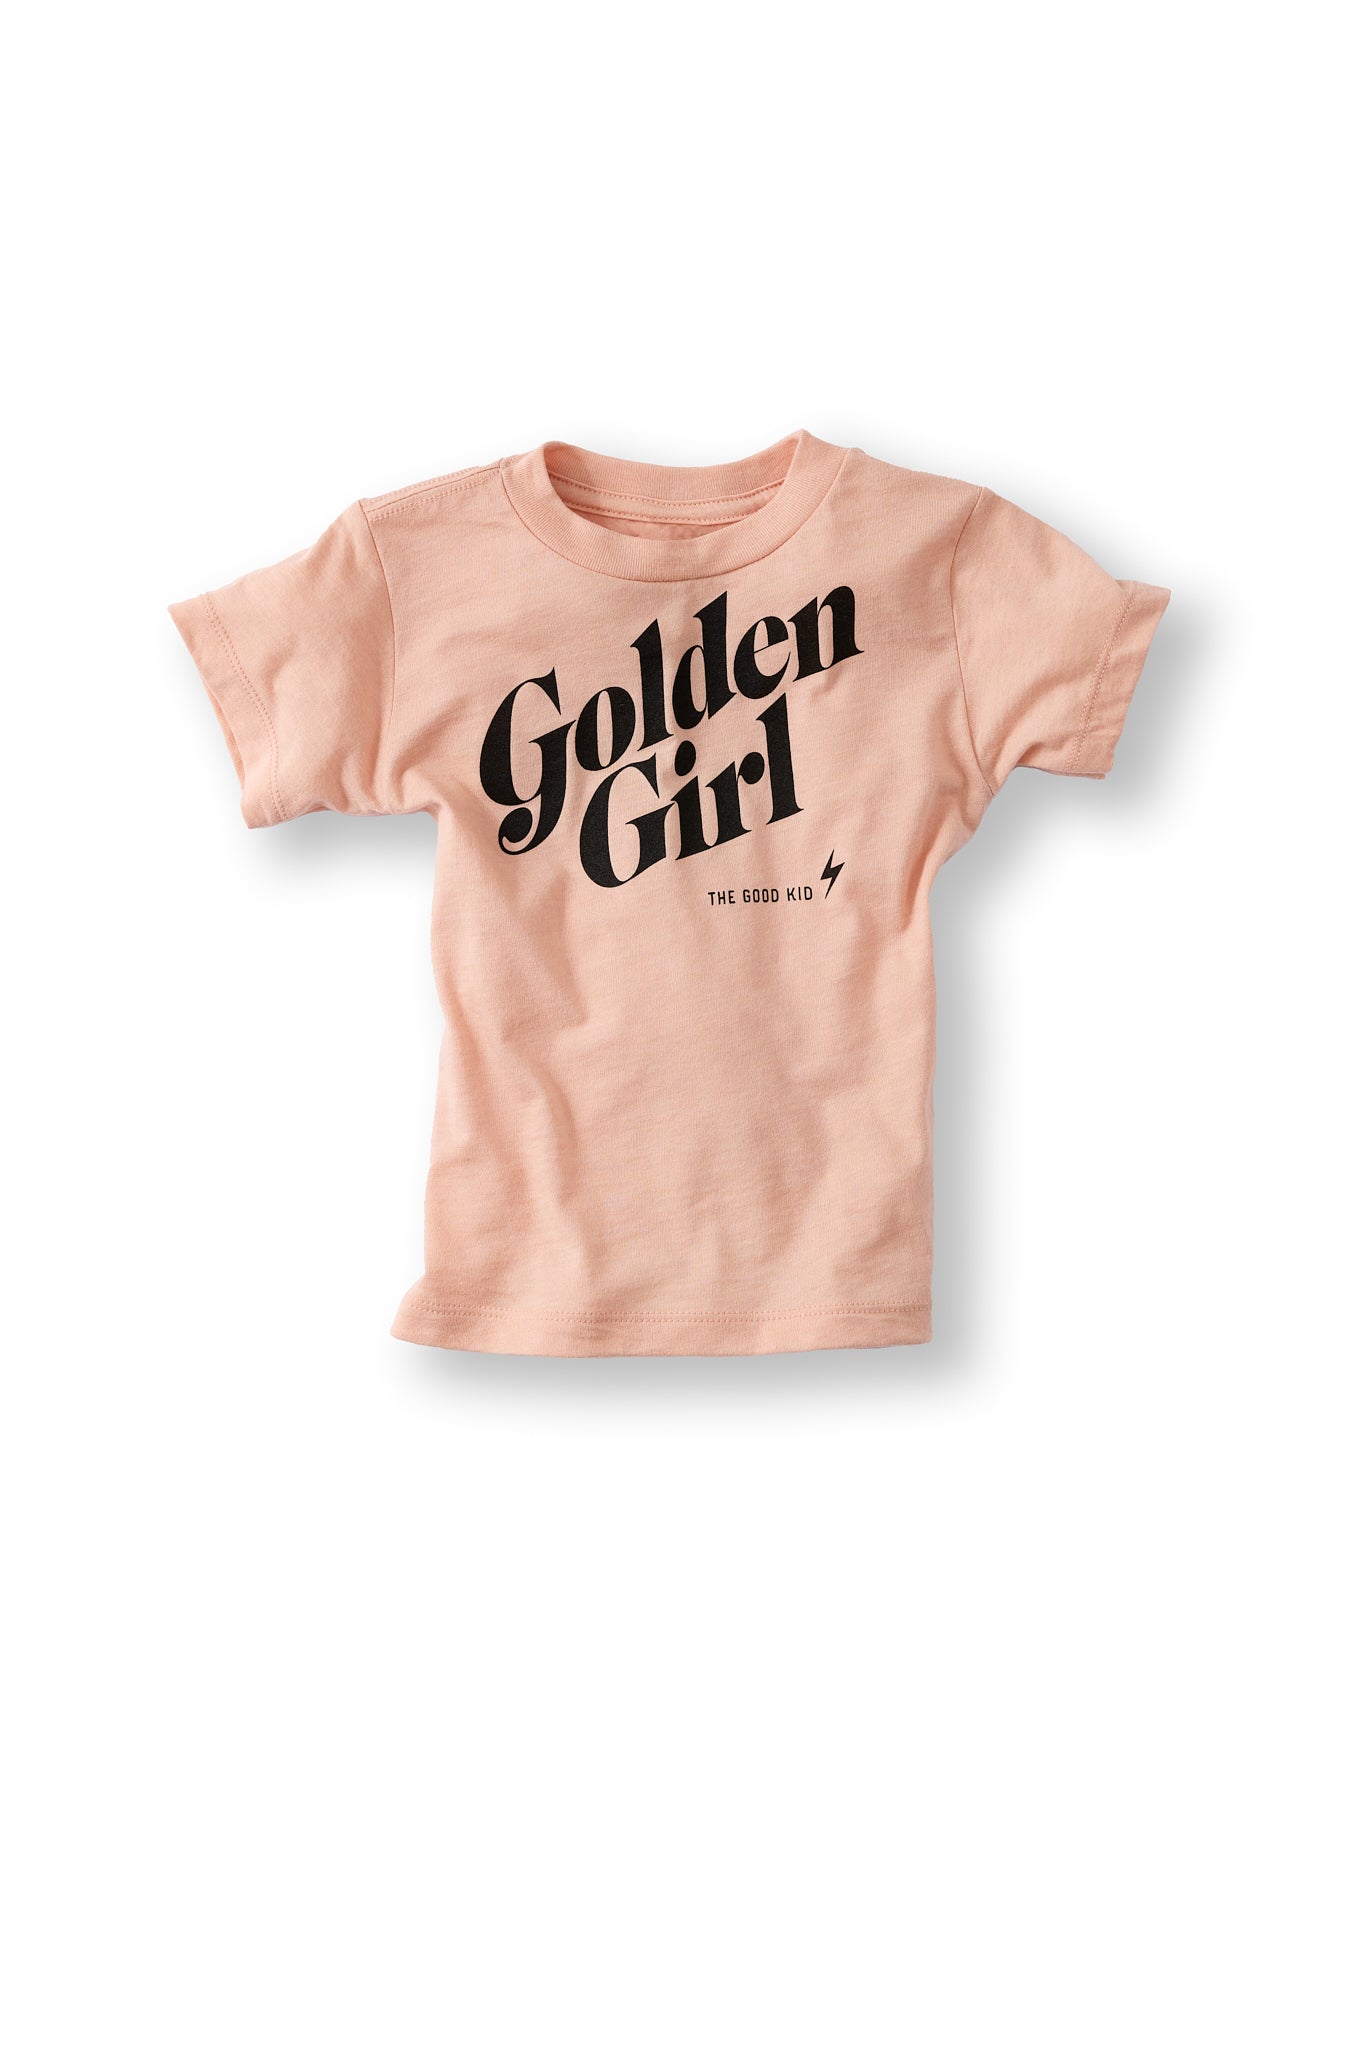 Golden Girl Tee